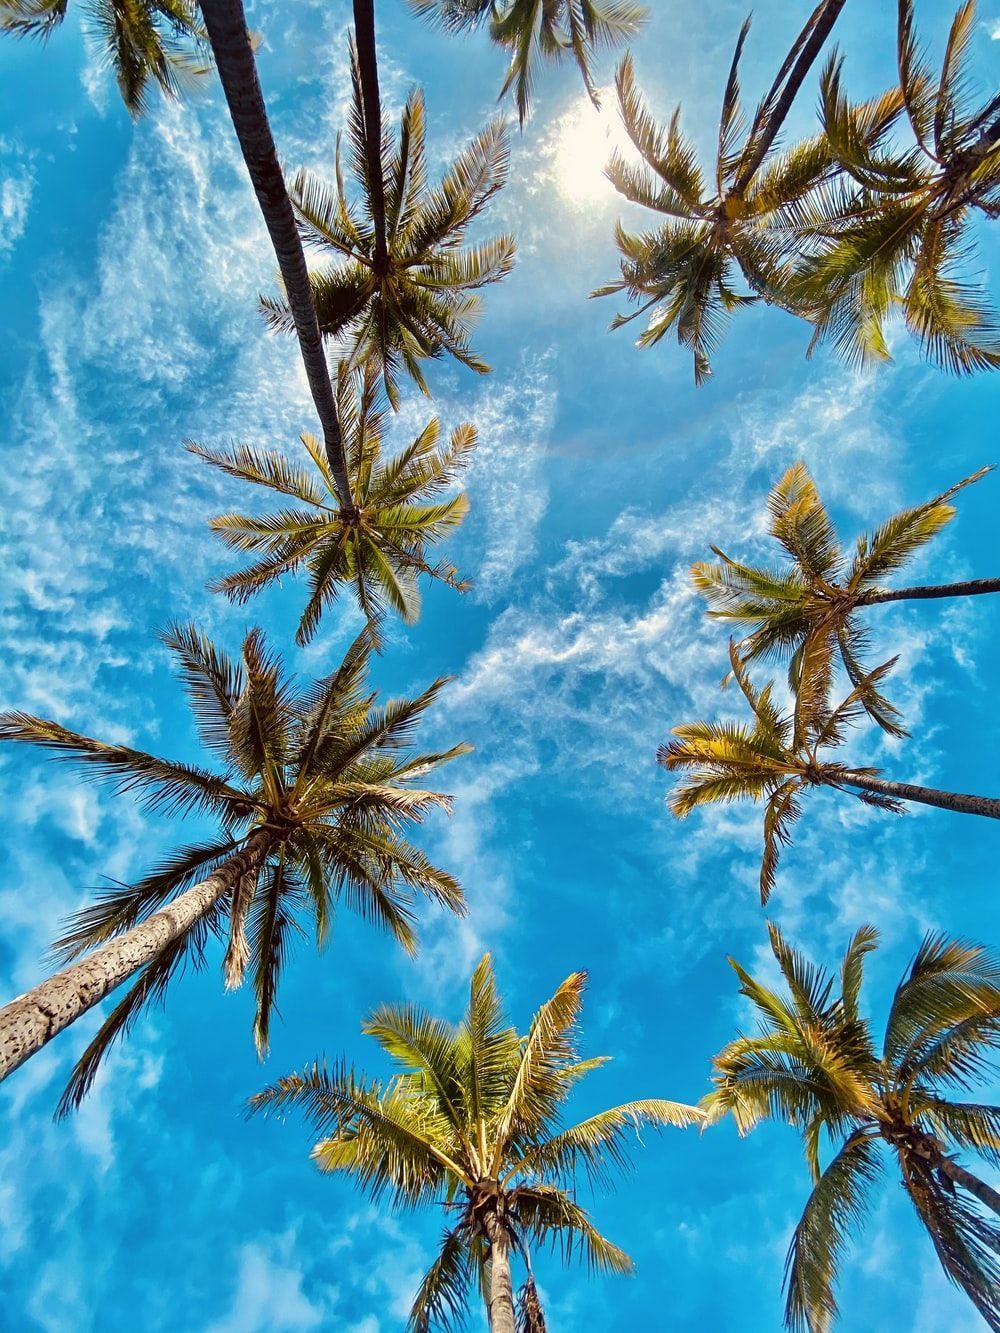 Palm trees against a blue sky - Tropical